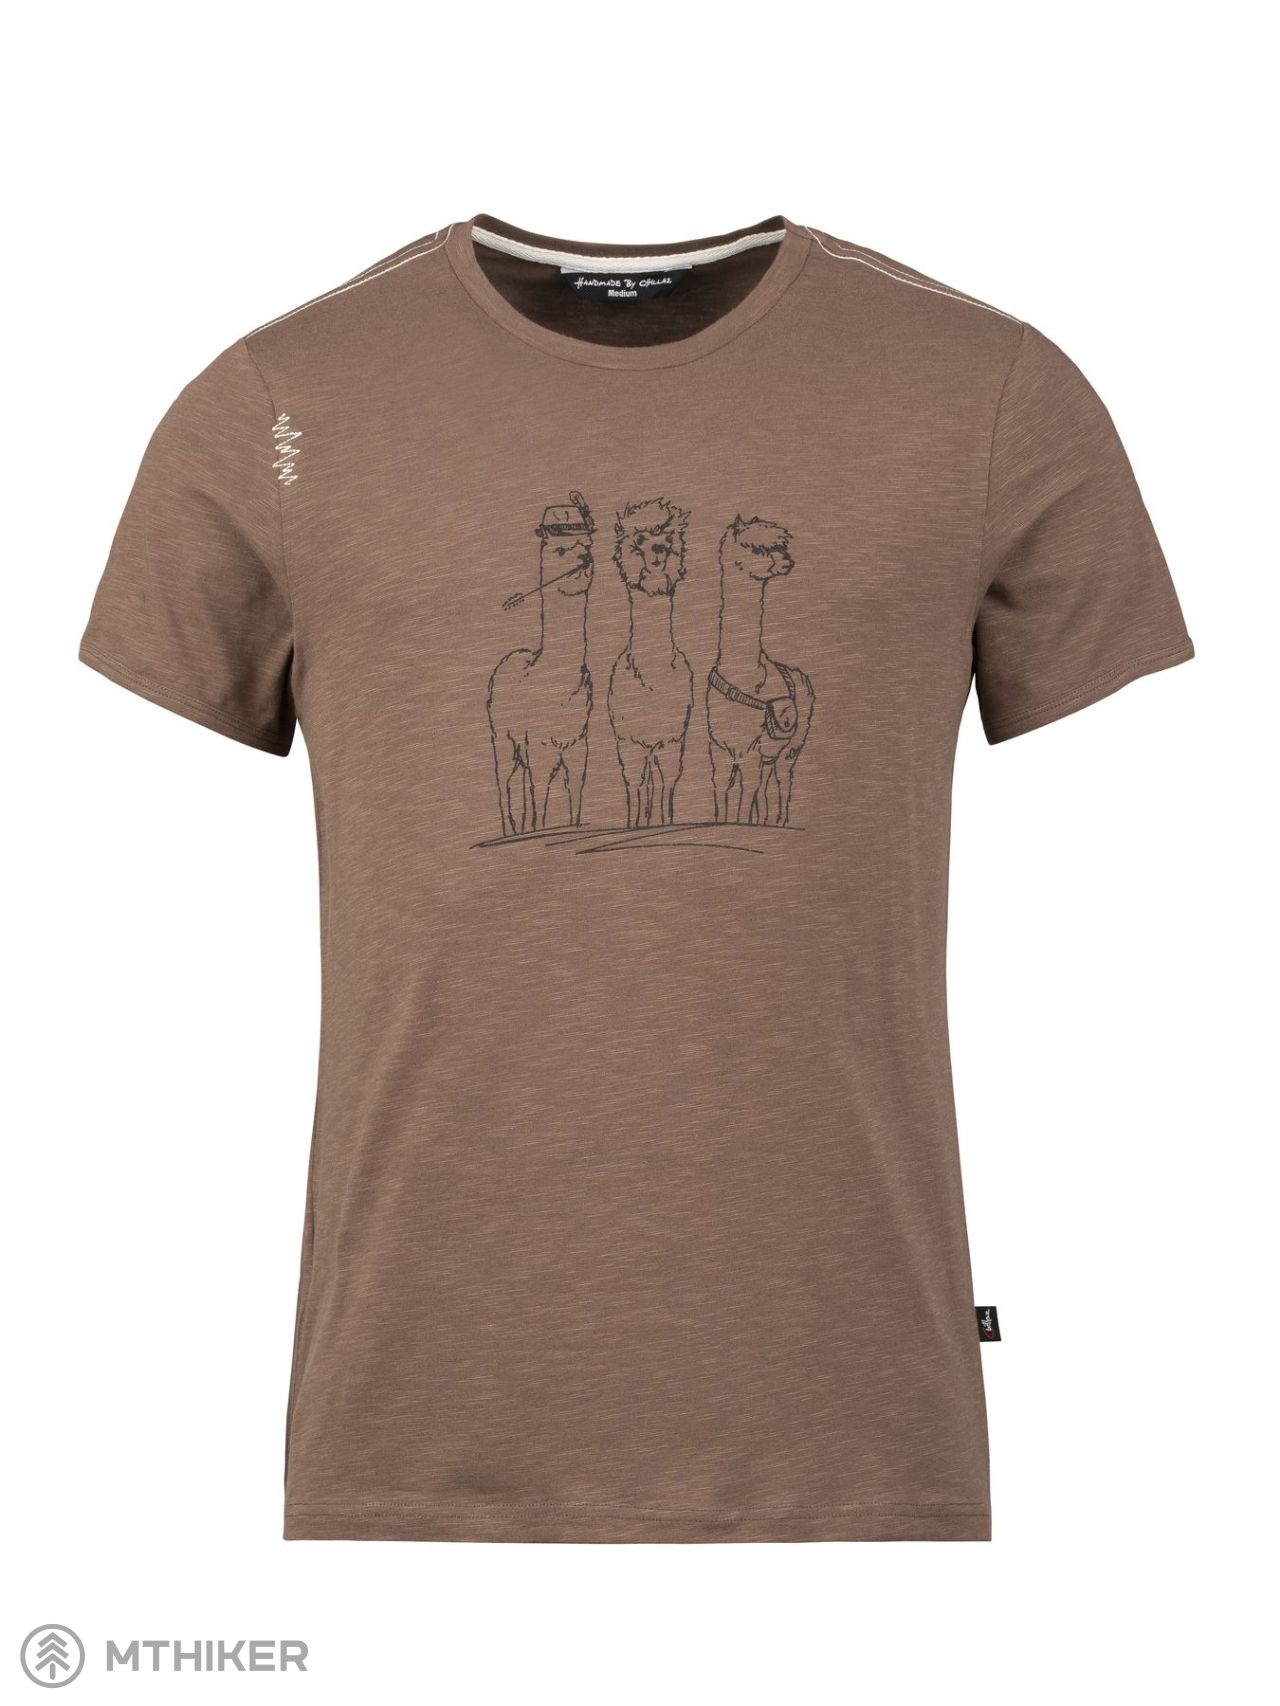 Chillaz ALPACA GANG t-shirt, brown